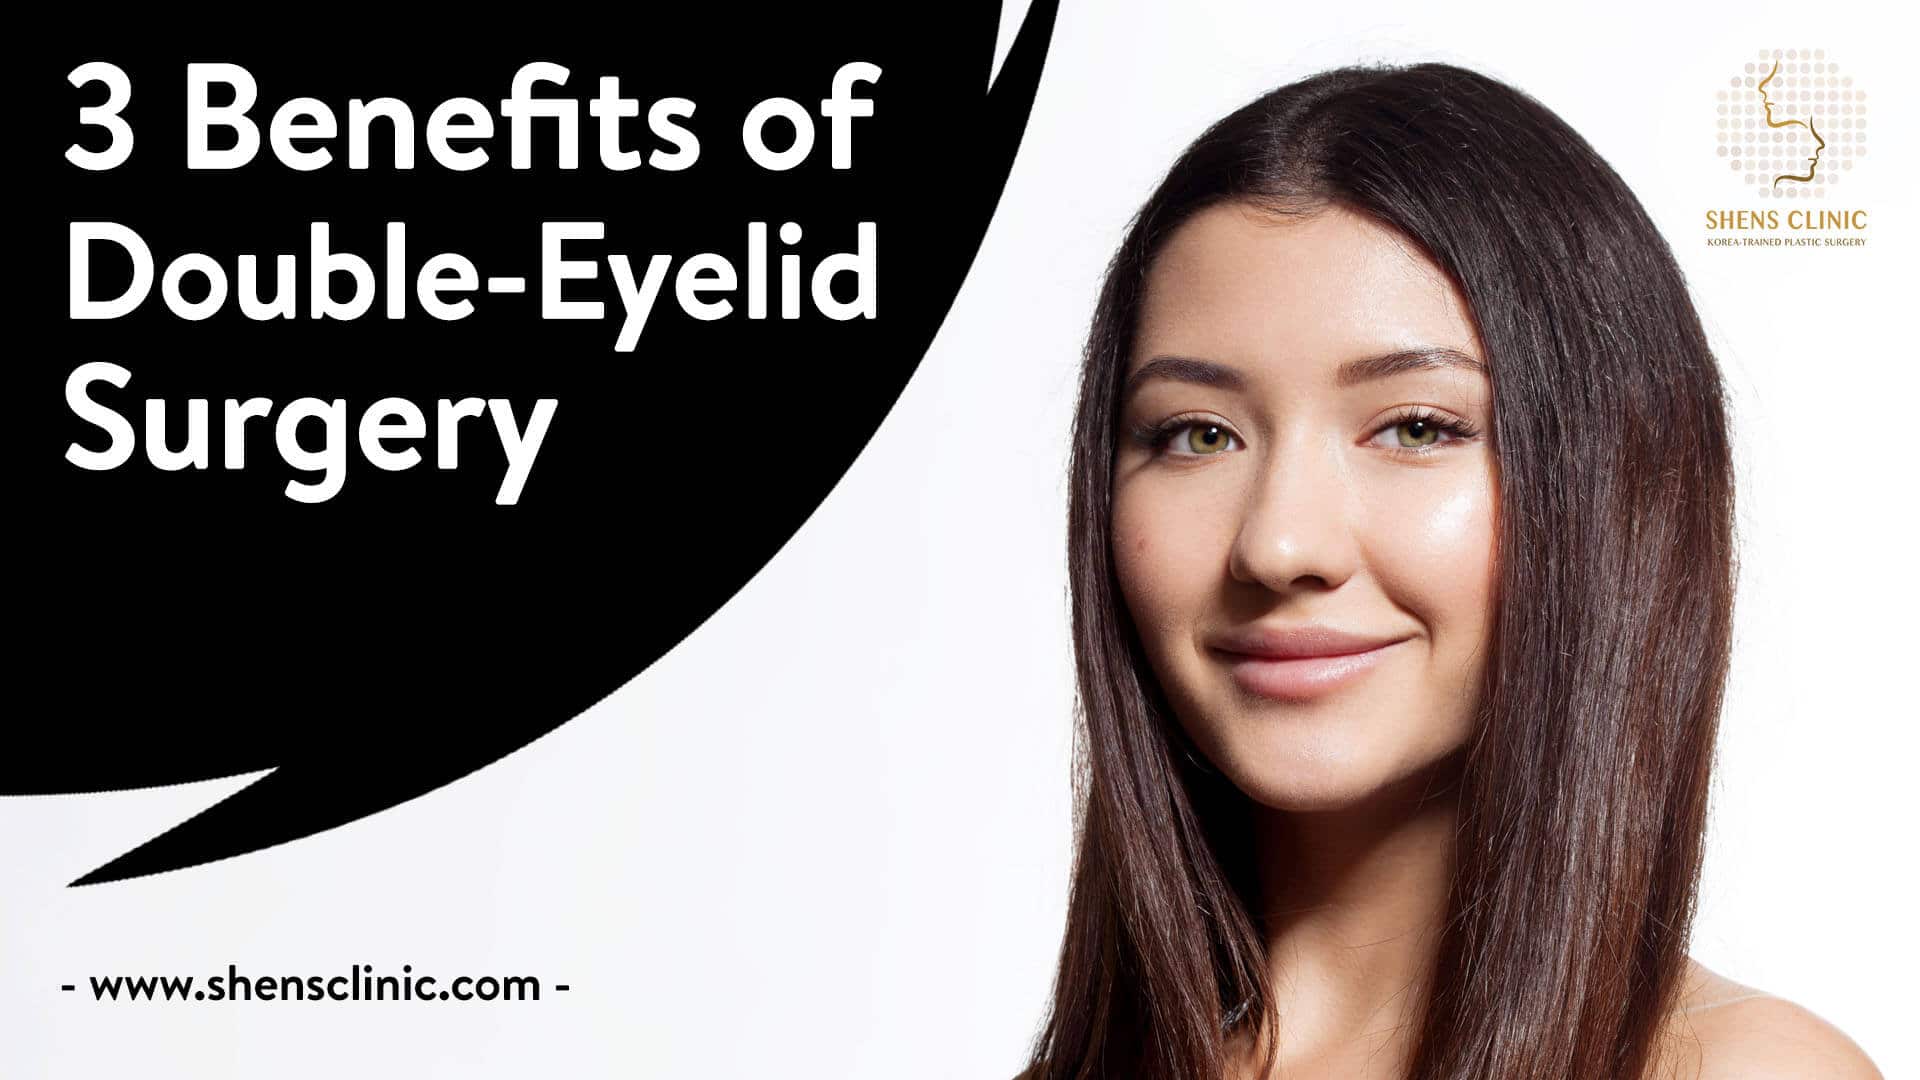 3 Benefits of Double-Eyelid Surgery